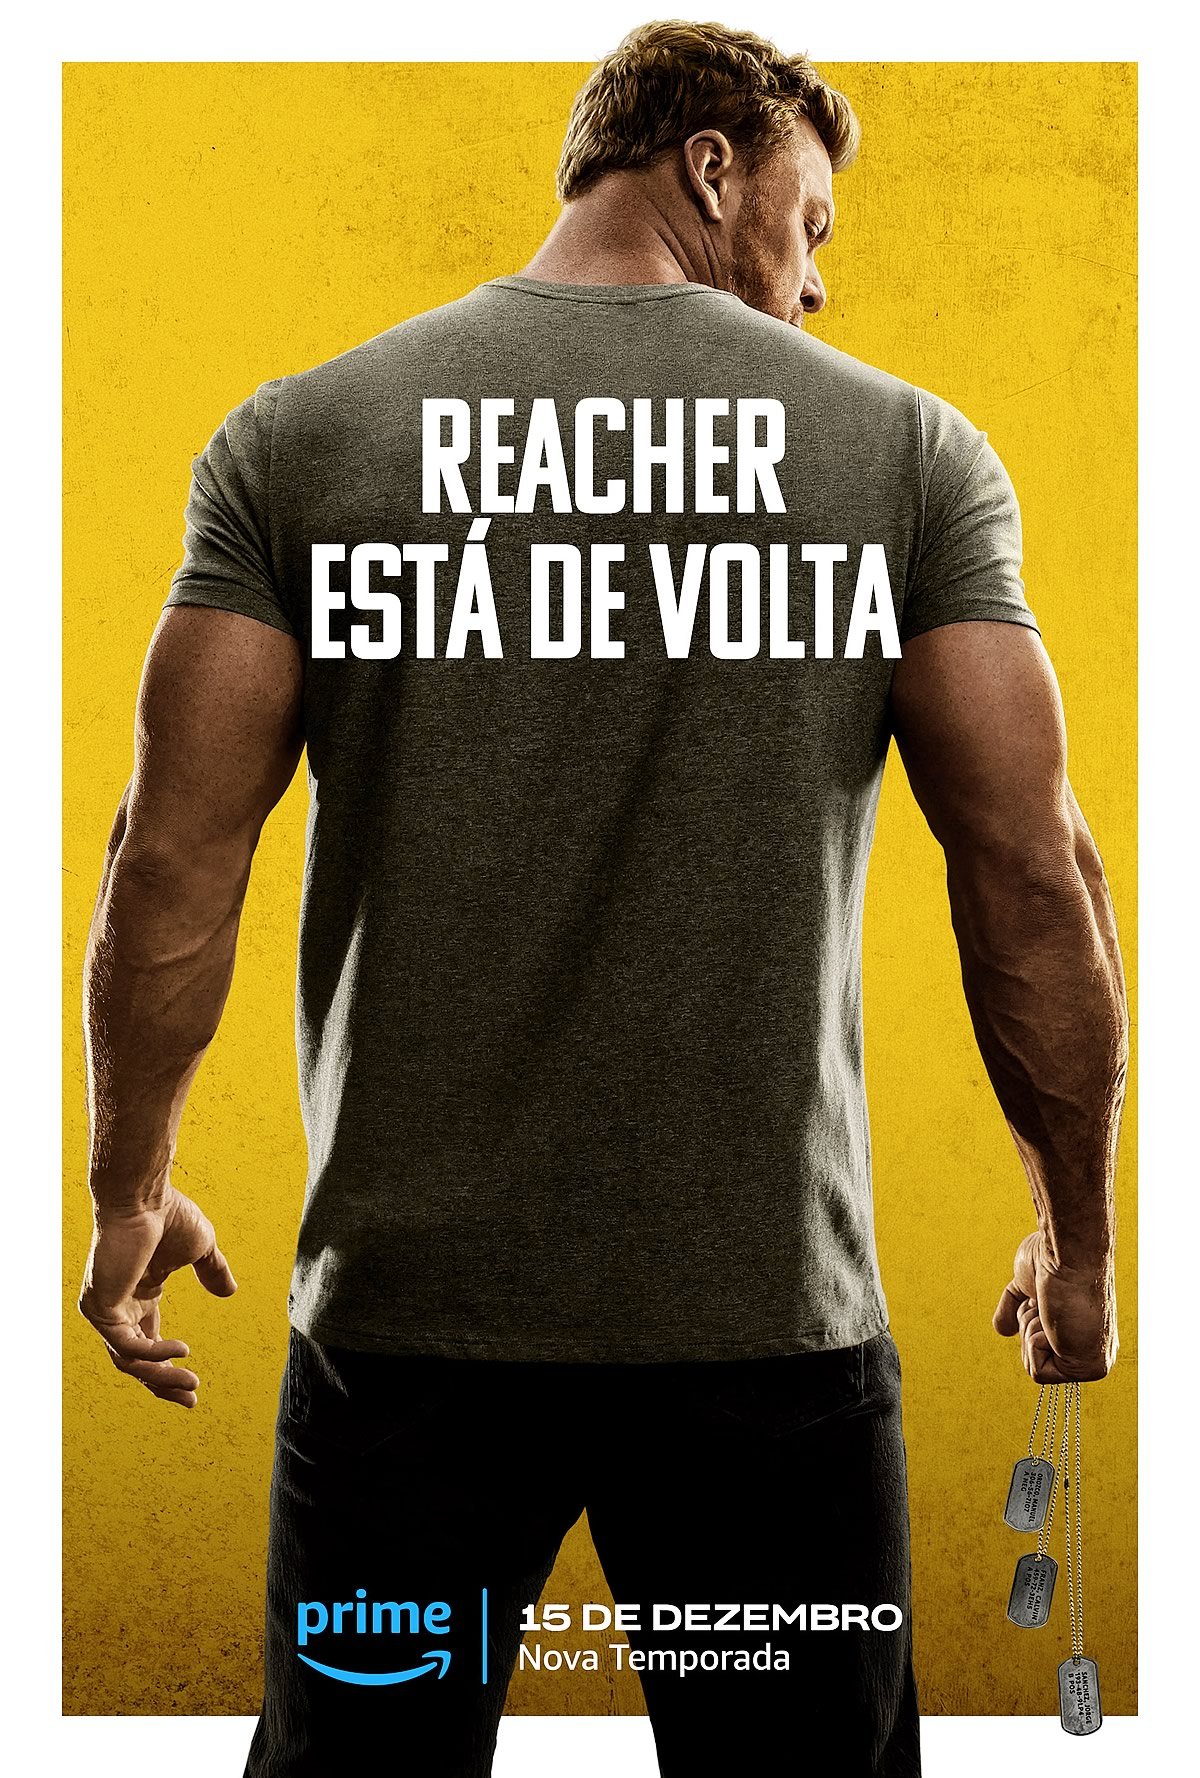 Reacher 2 | Trailer da segunda temporada de Jack Reacher, interpretado por Alan Ritchson, na Prime Video